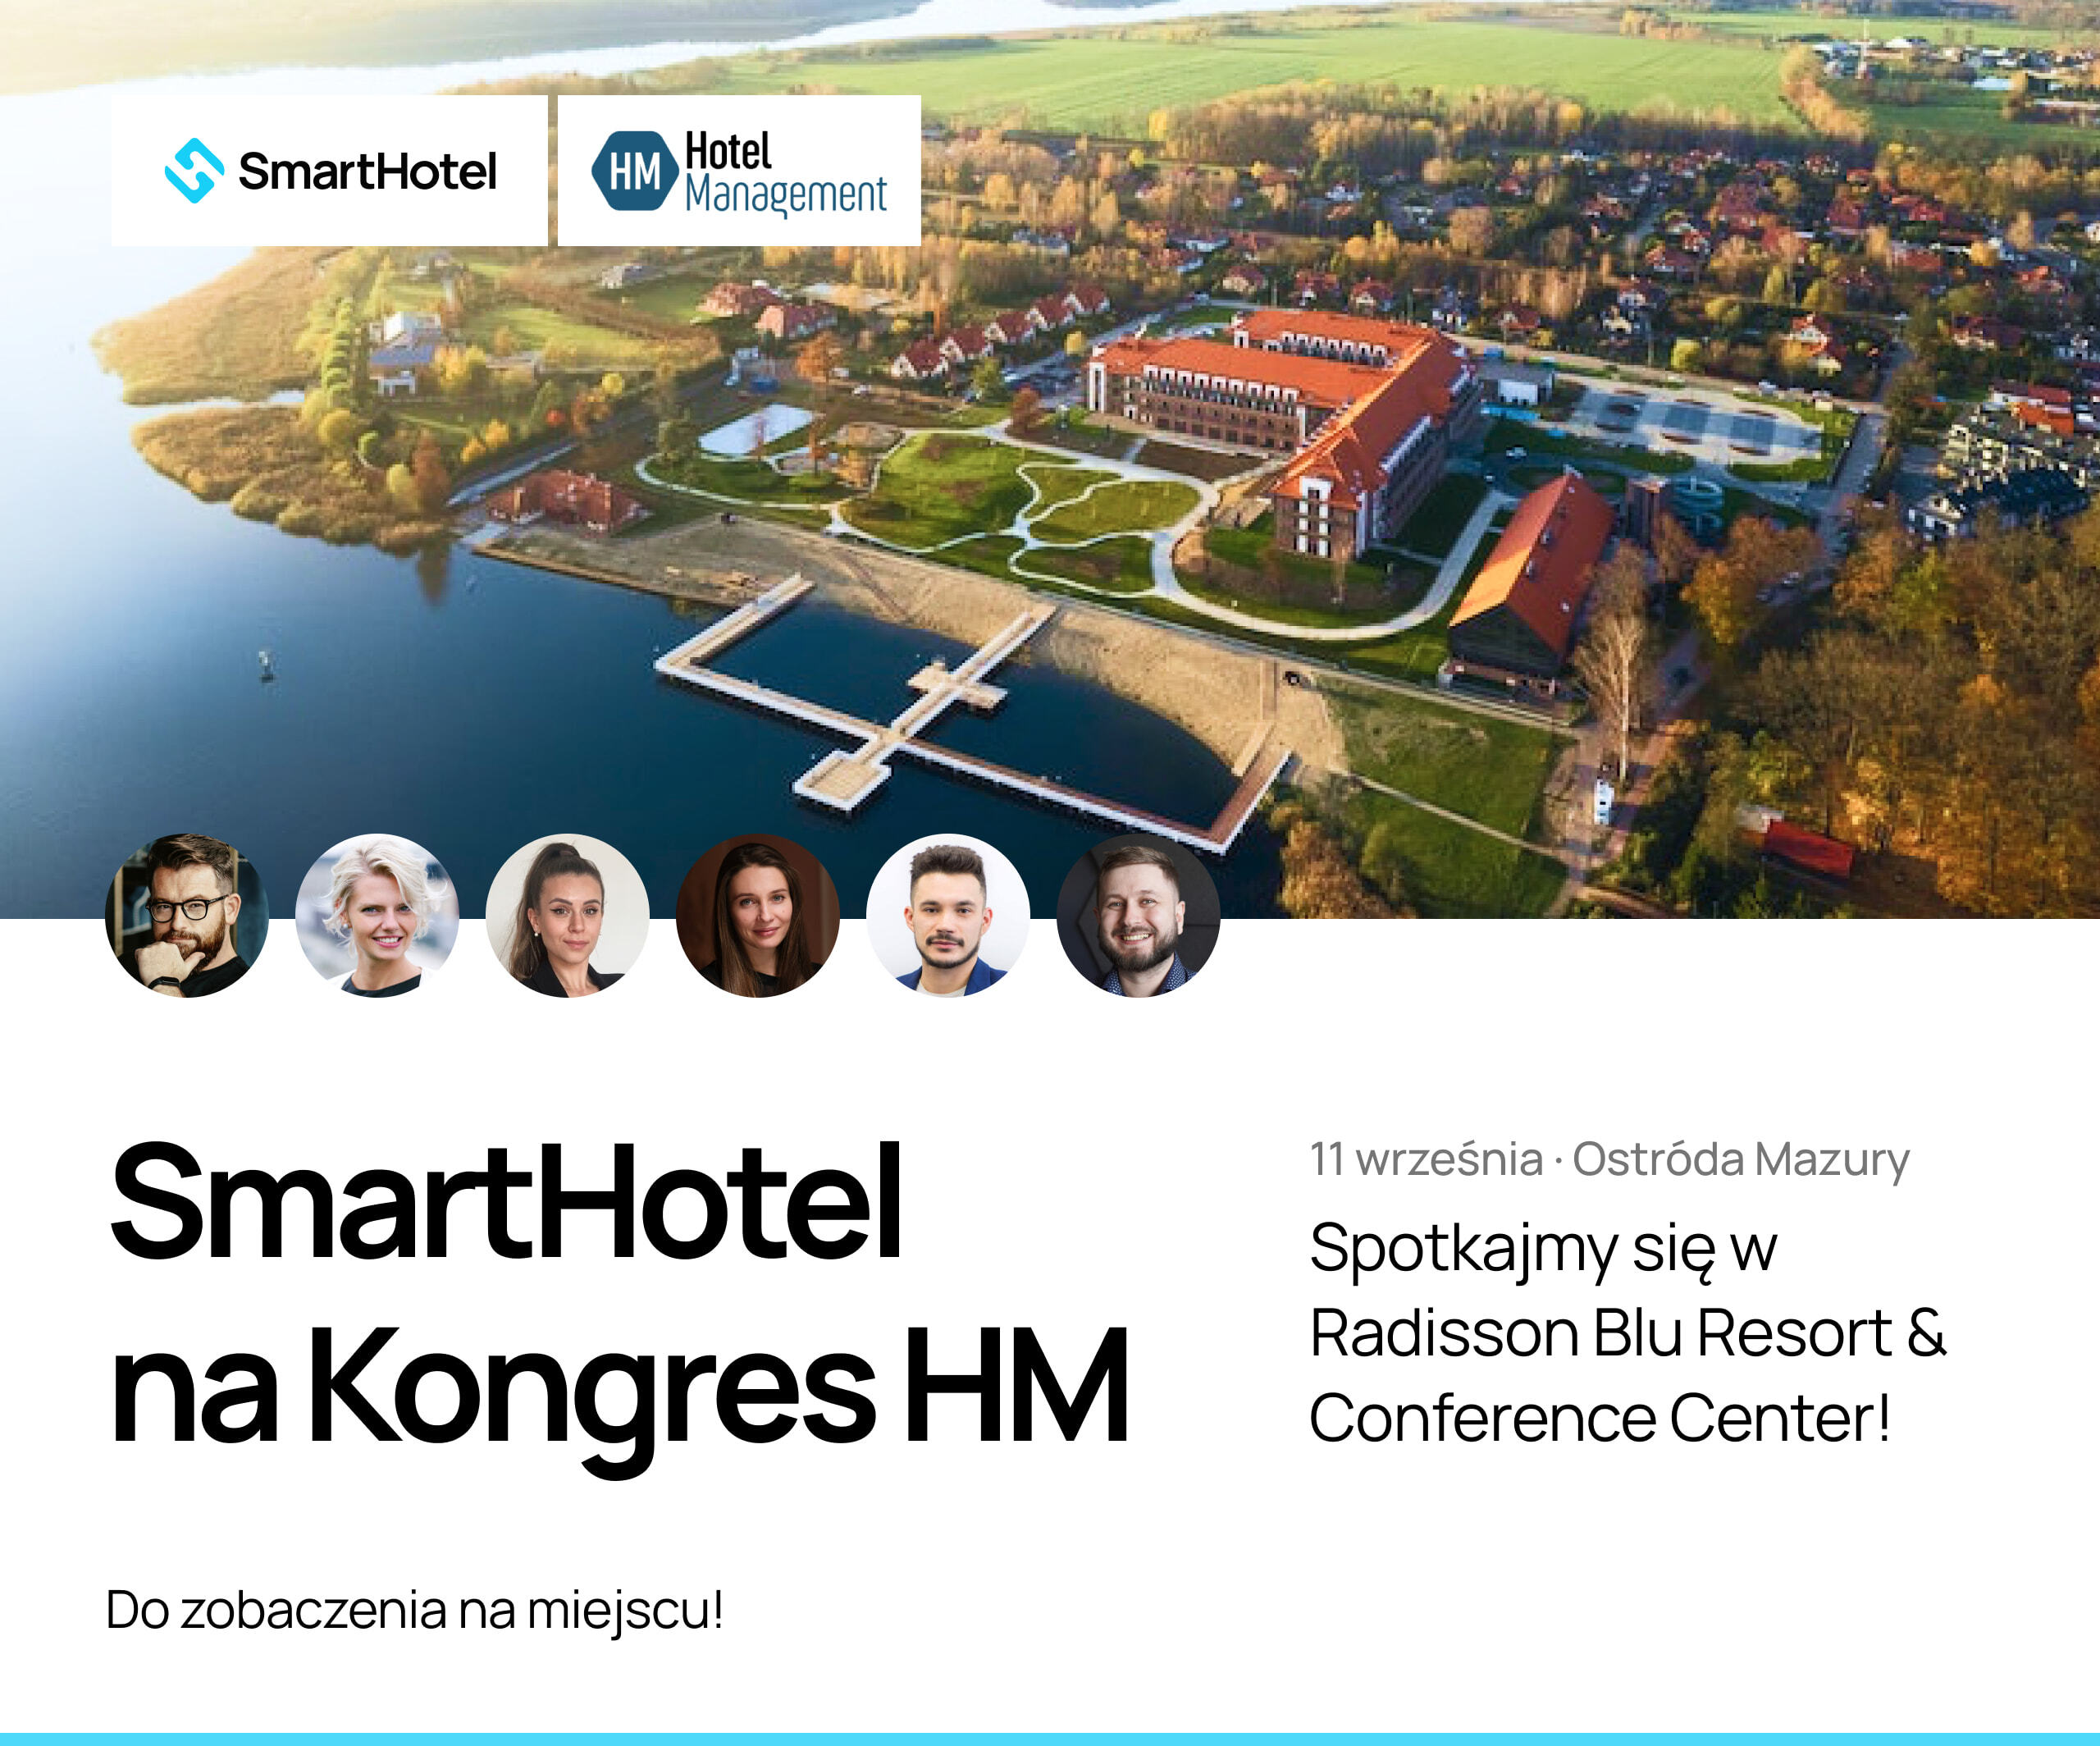 SmartHotel na Kongres Hotel Management!